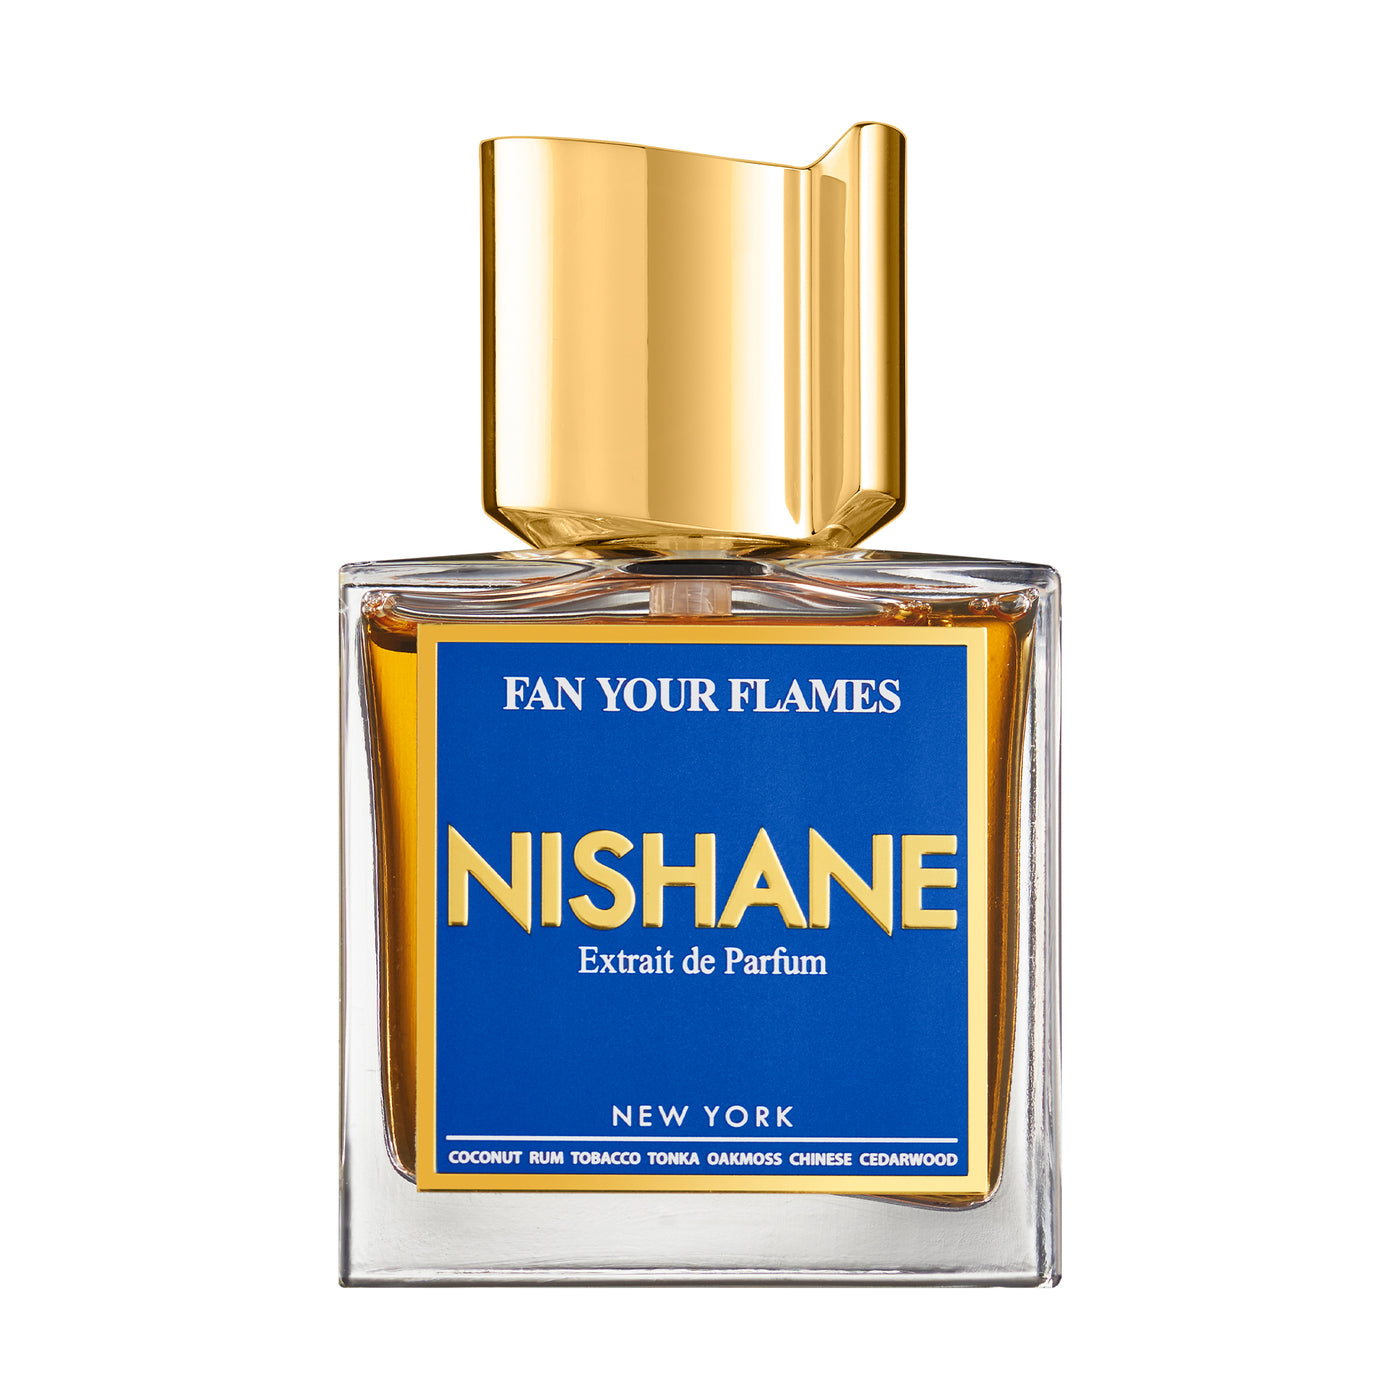 Nishane Fan Your Flames EXT 50ml